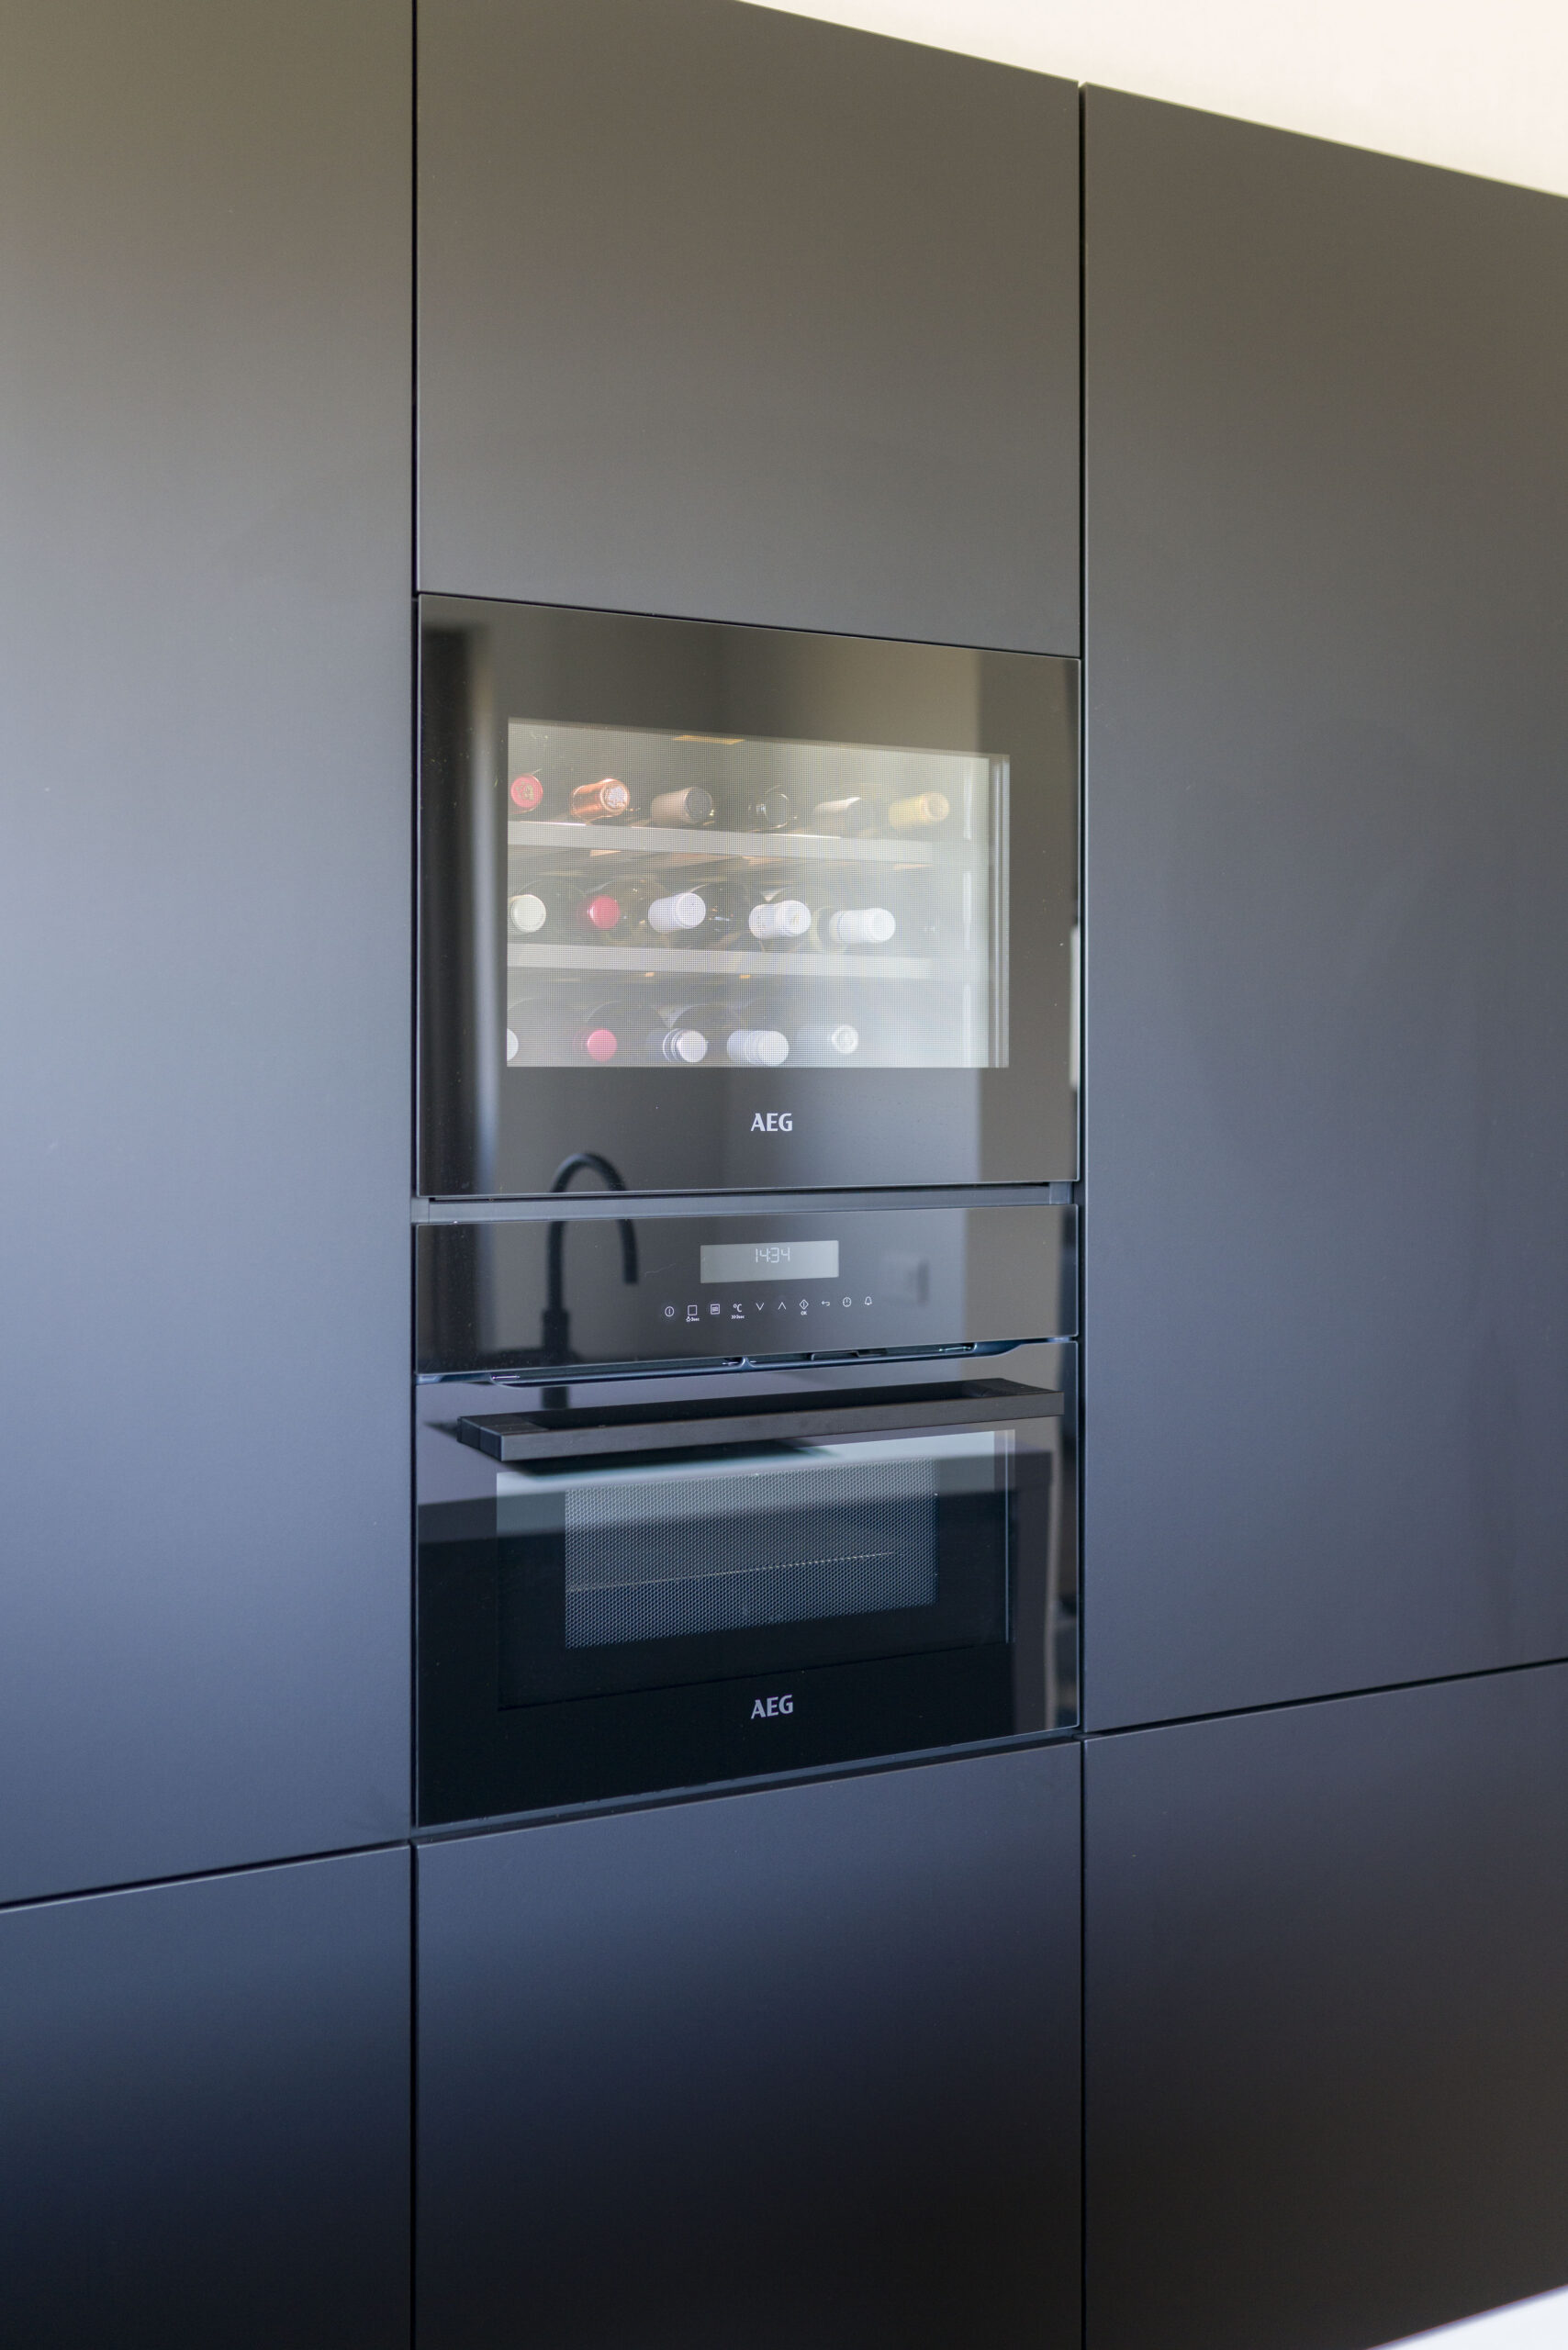 Modern apparatuur in zwarte keuken